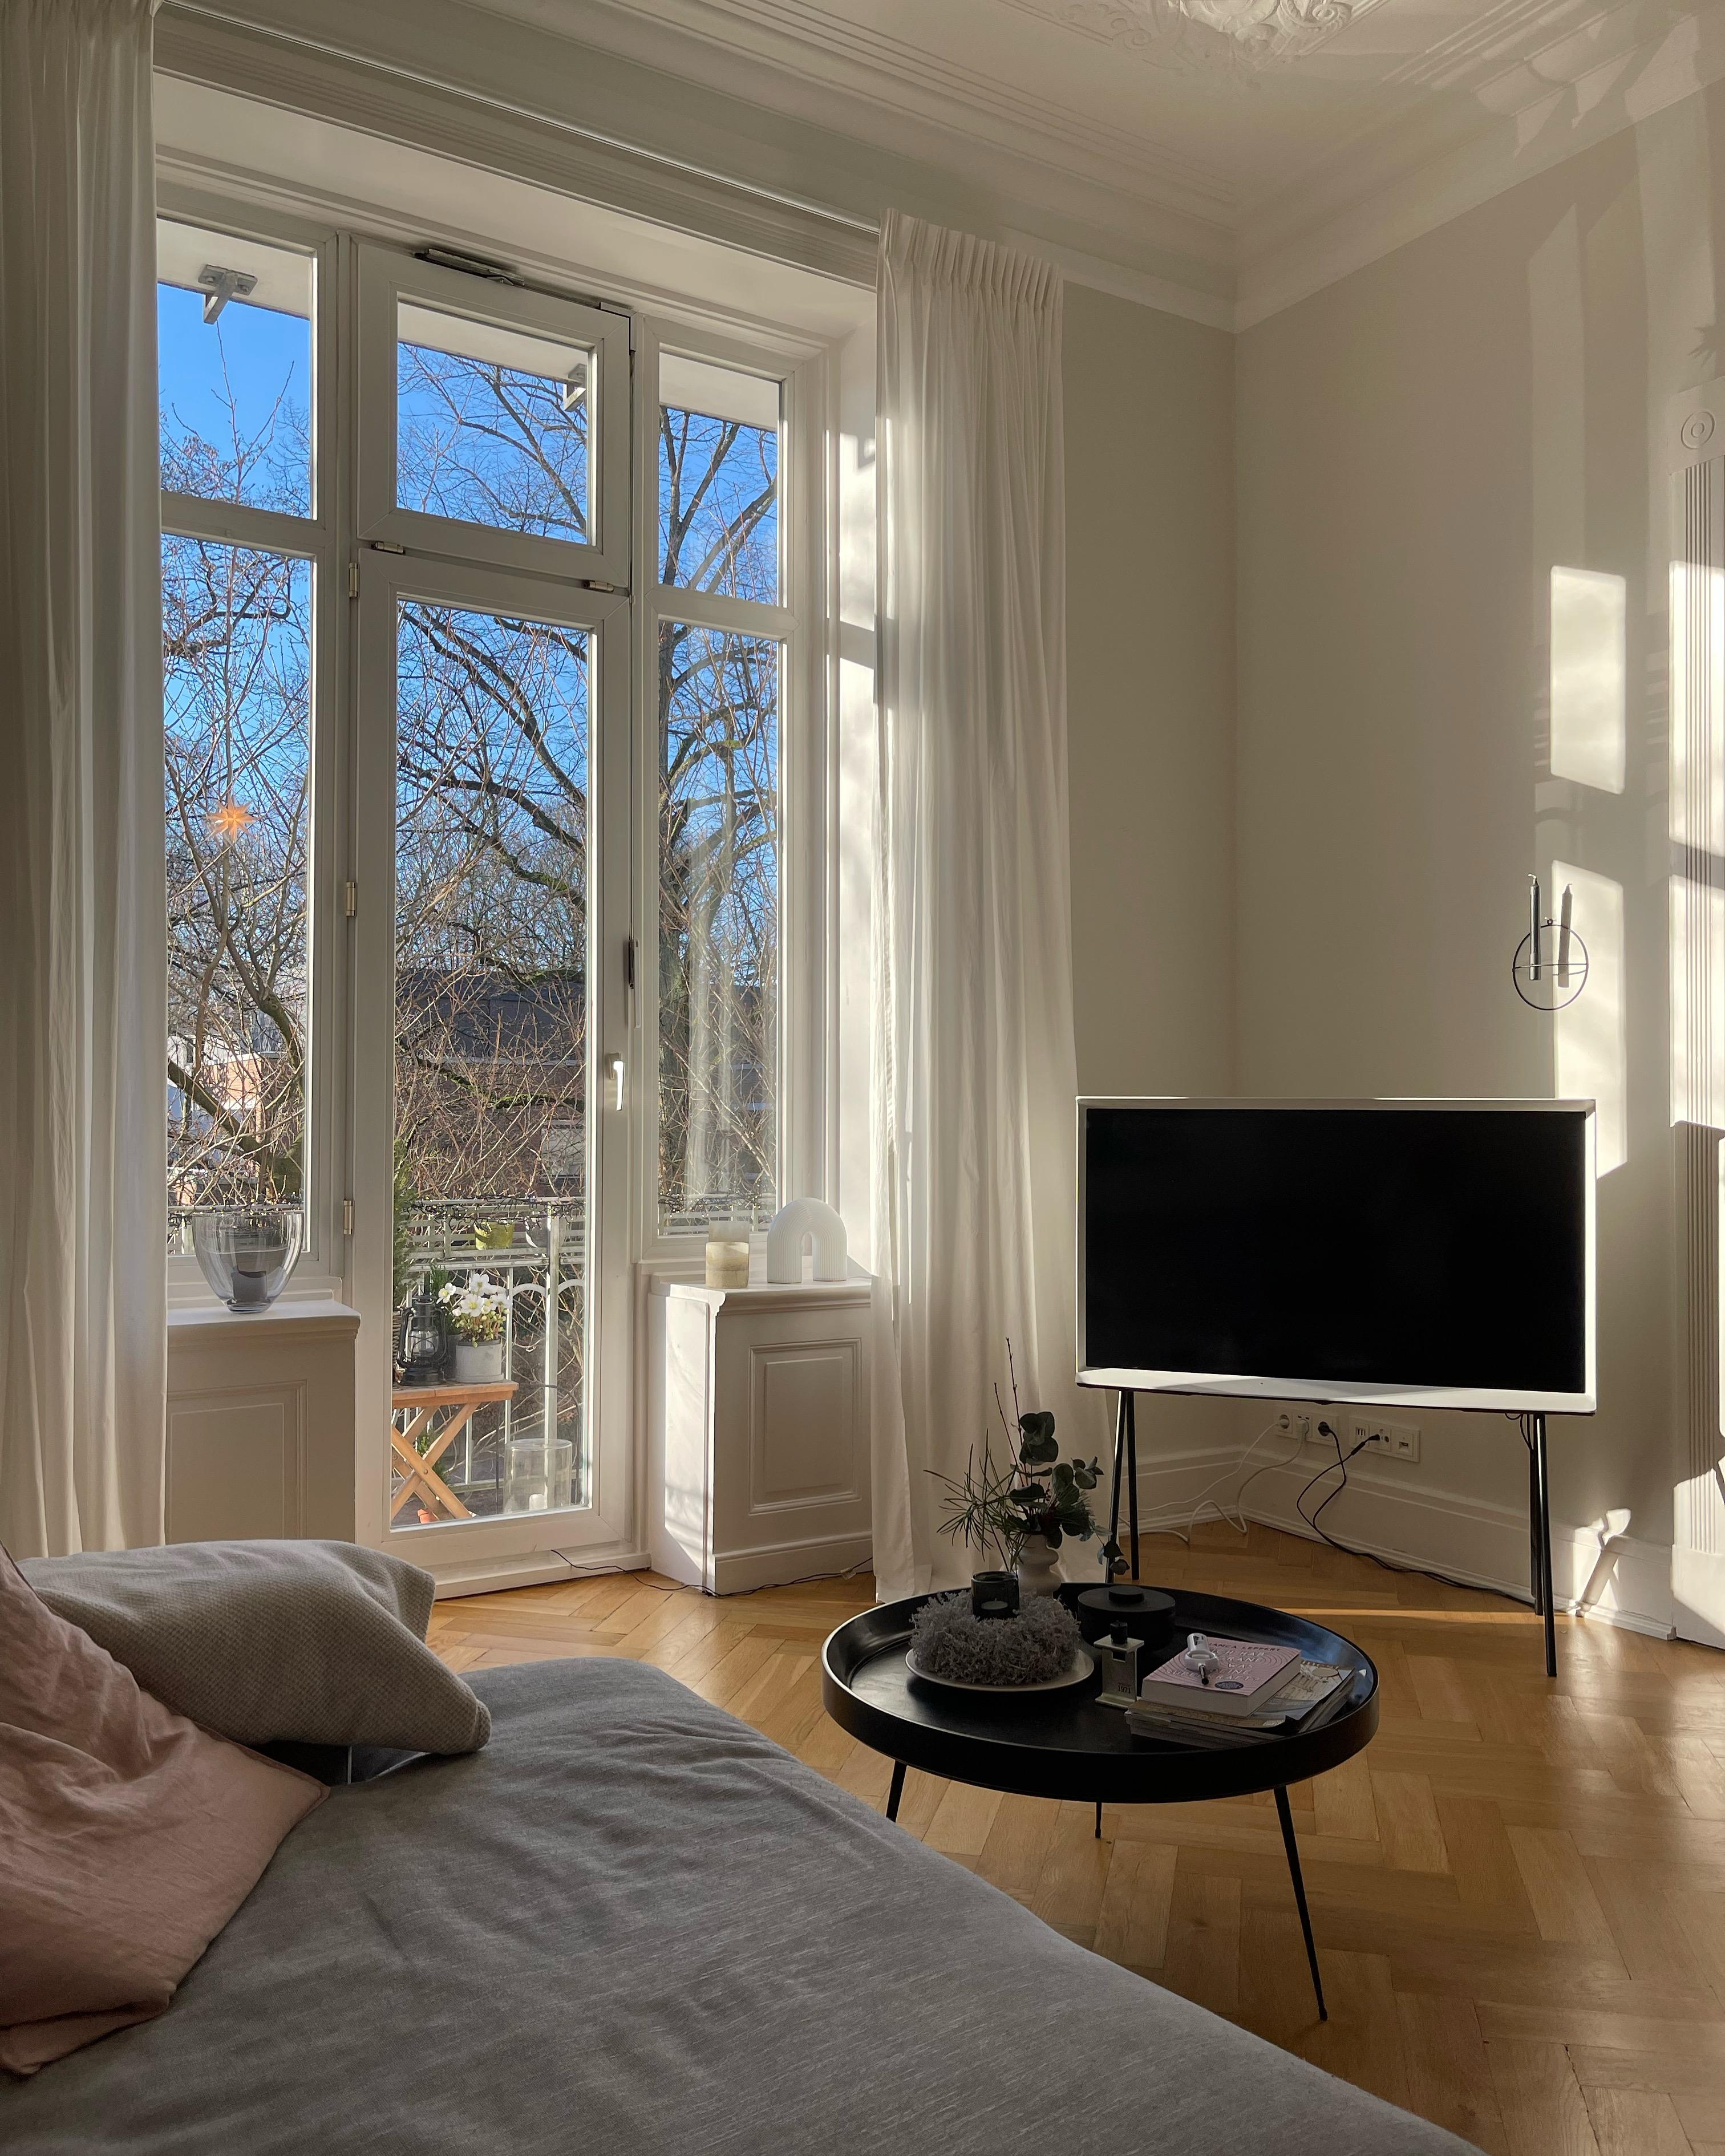 #sunlight #sonne #living #livingroom #wohnen #couchstyle #altbau #myhome #zuhause